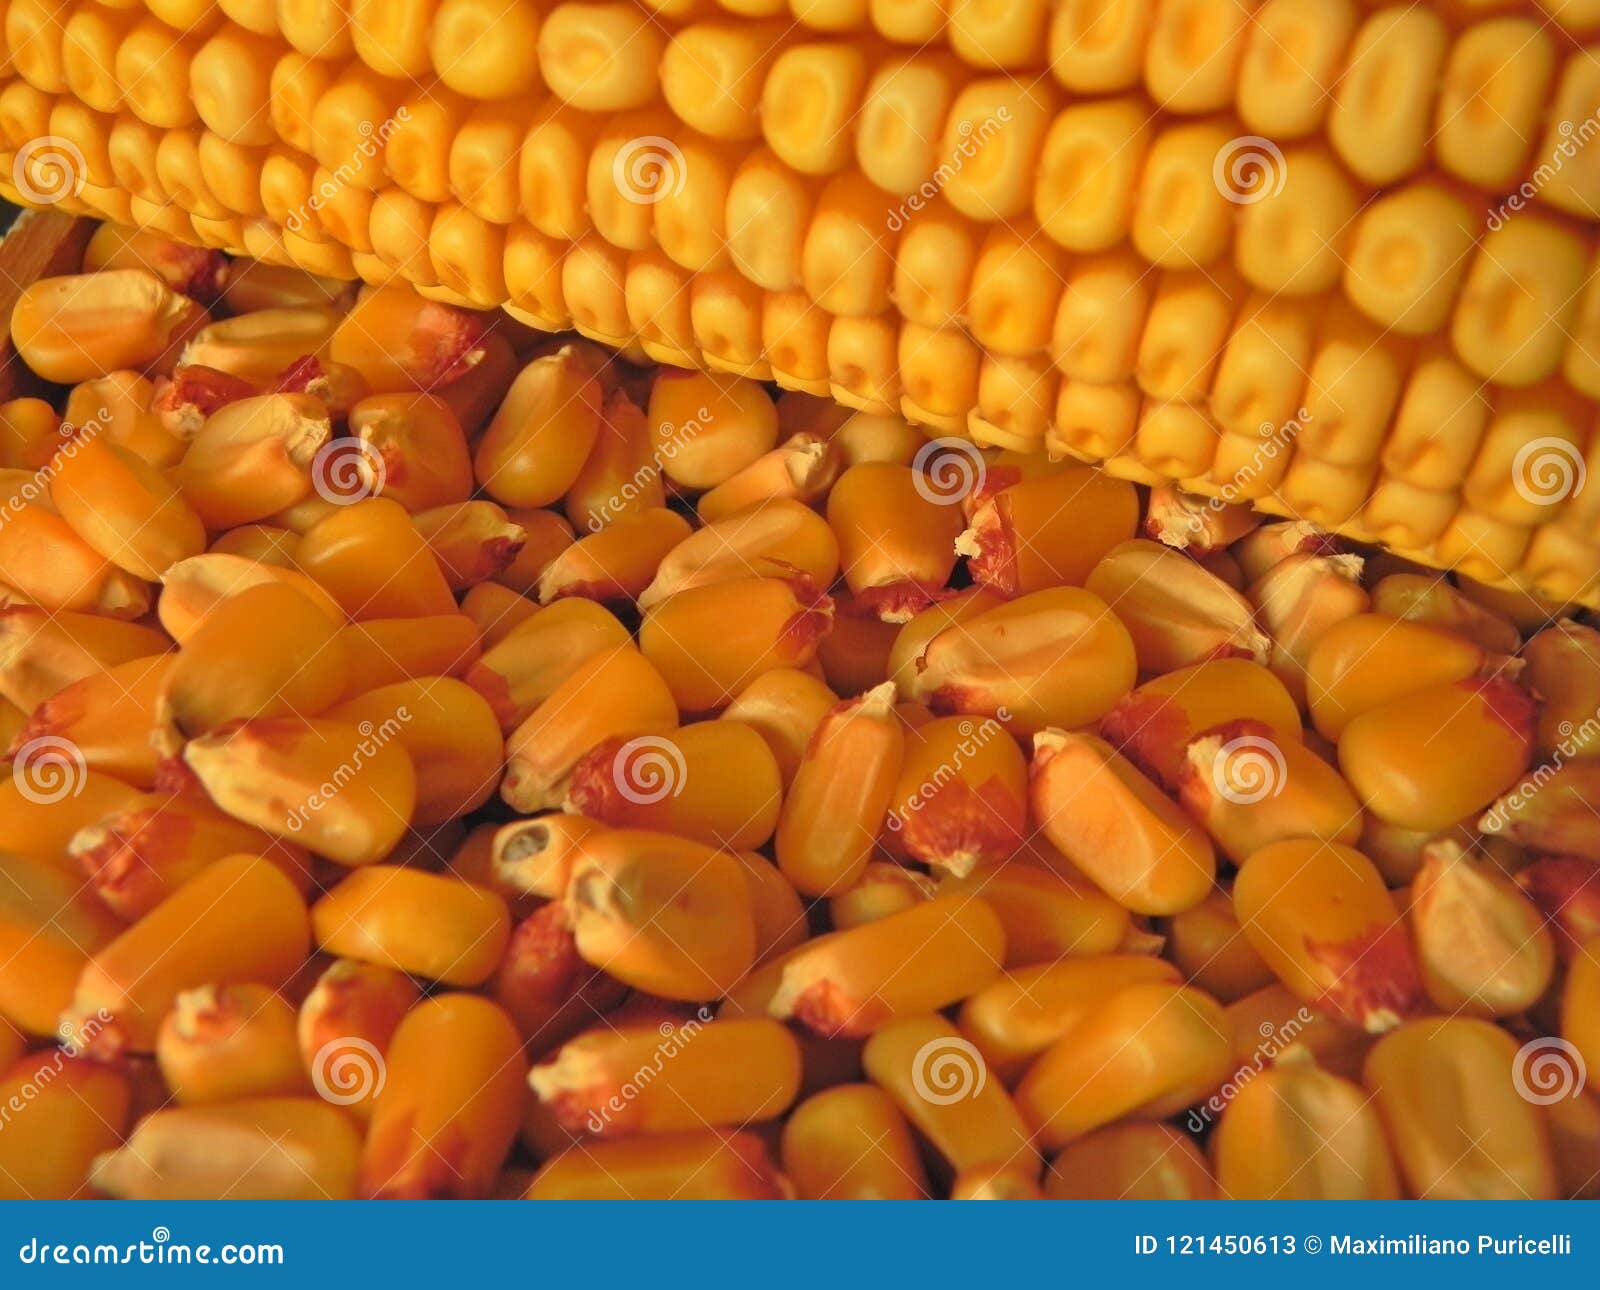 ear and corn seed